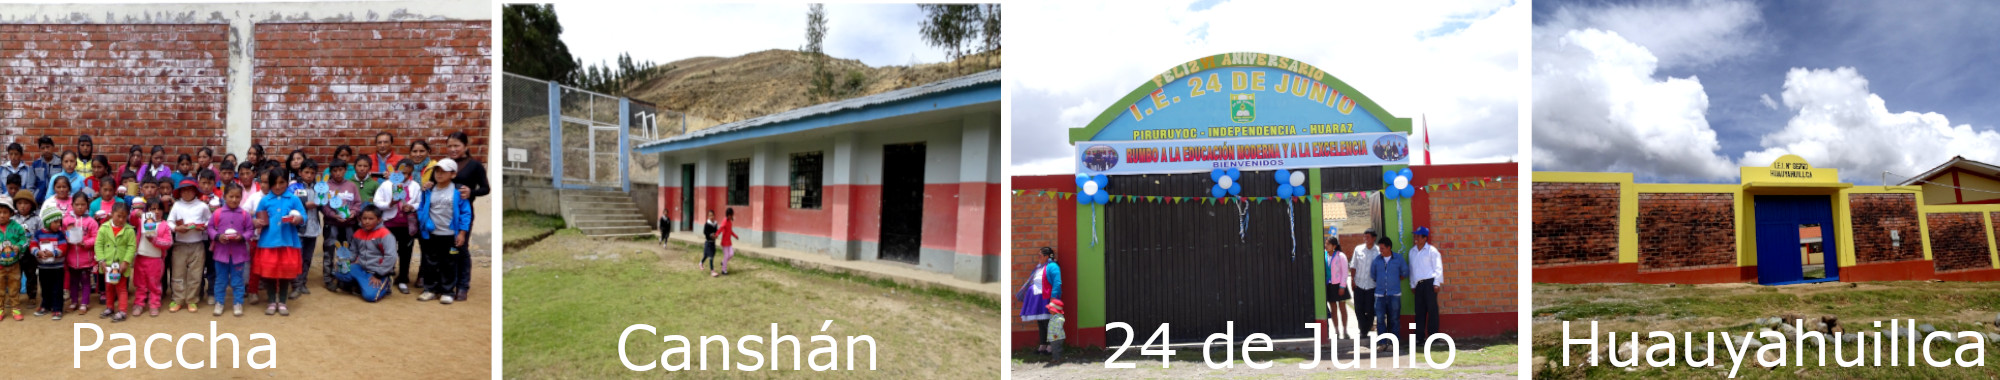 proyectos educativos quechuas